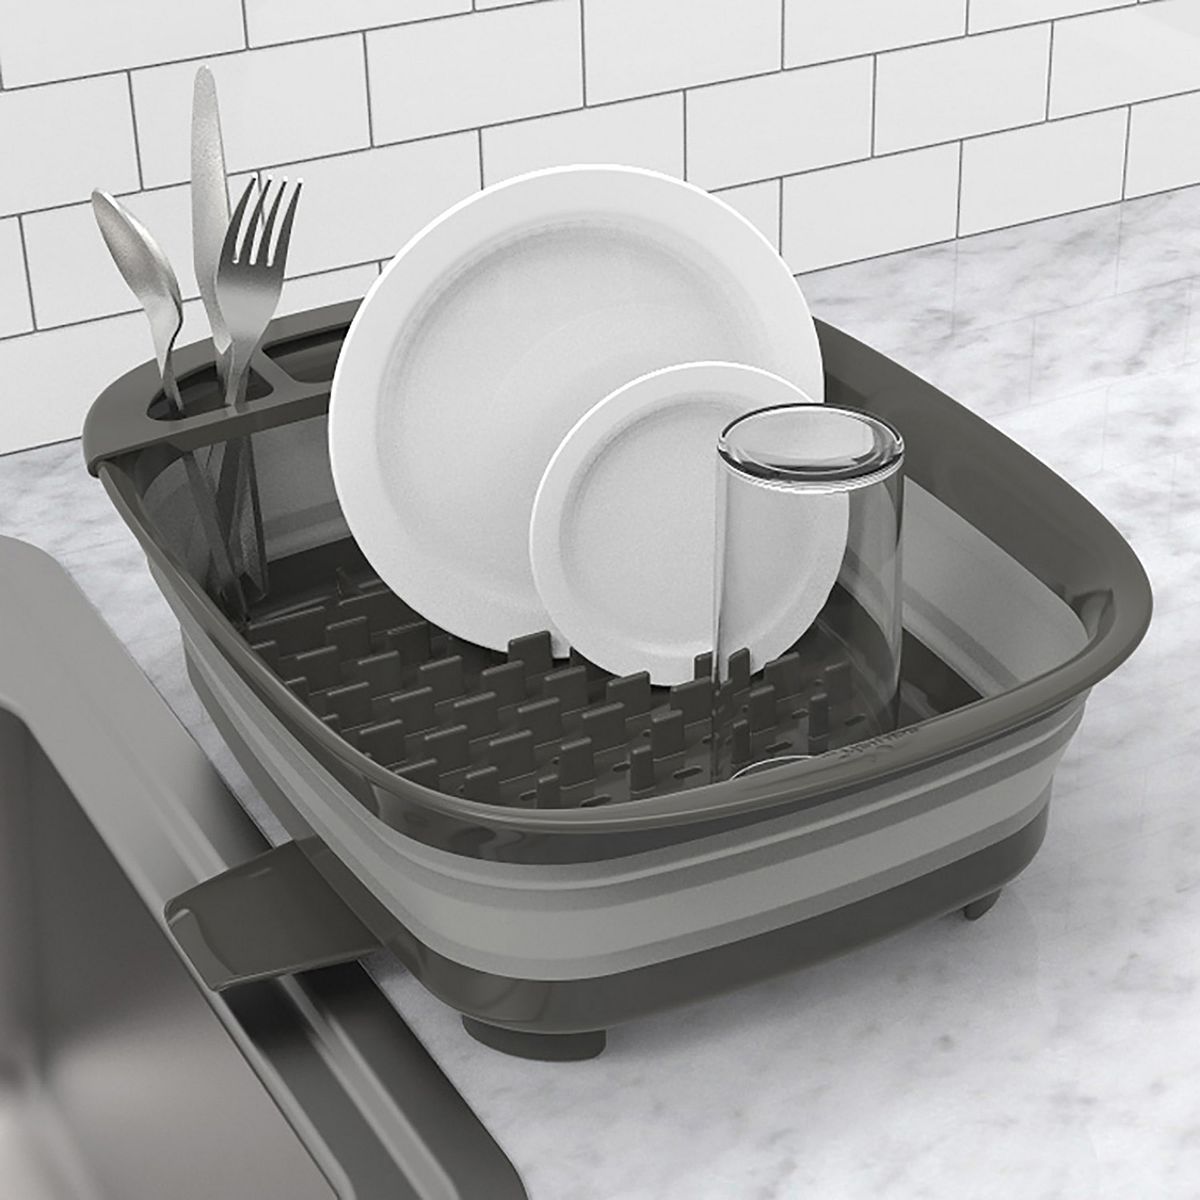 Spening SPENING Collapsible Dish Drying Rack - Dish Drainer